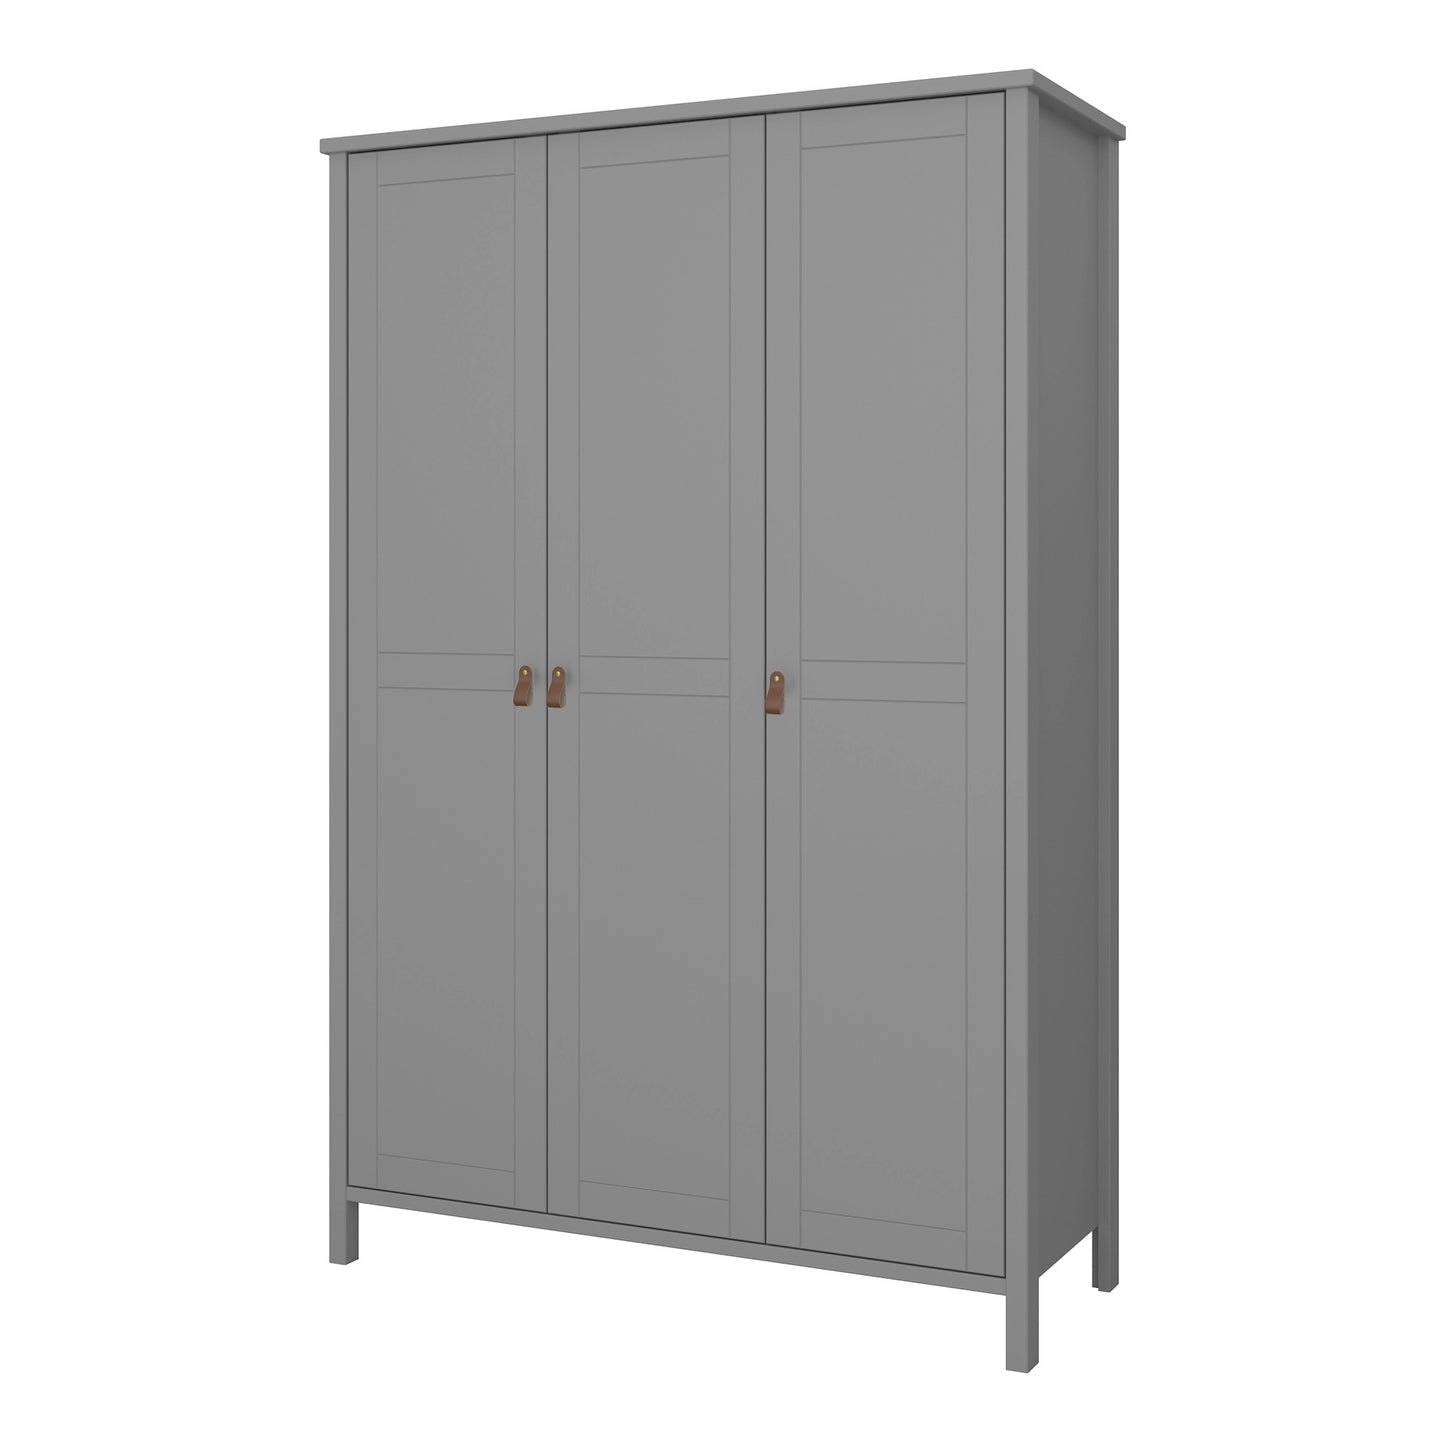 Furniture To Go Tromso 3 Doors Wardrobe Folkestone Grey with Leather Handles